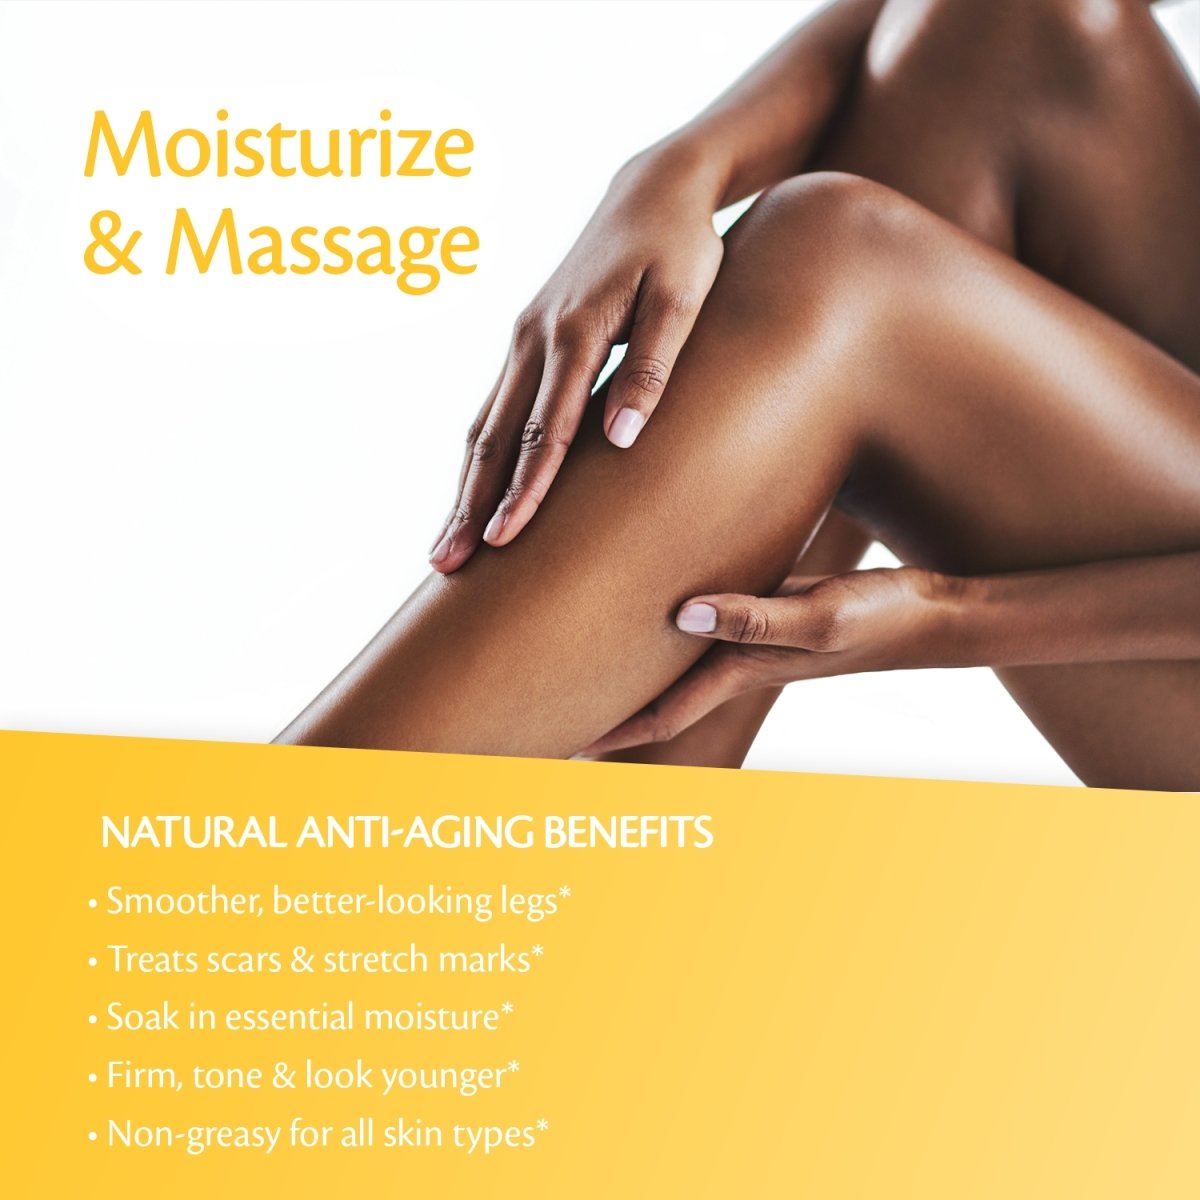 M3 Naturals Anti Cellulite Massage Oil with Collagen 8 oz